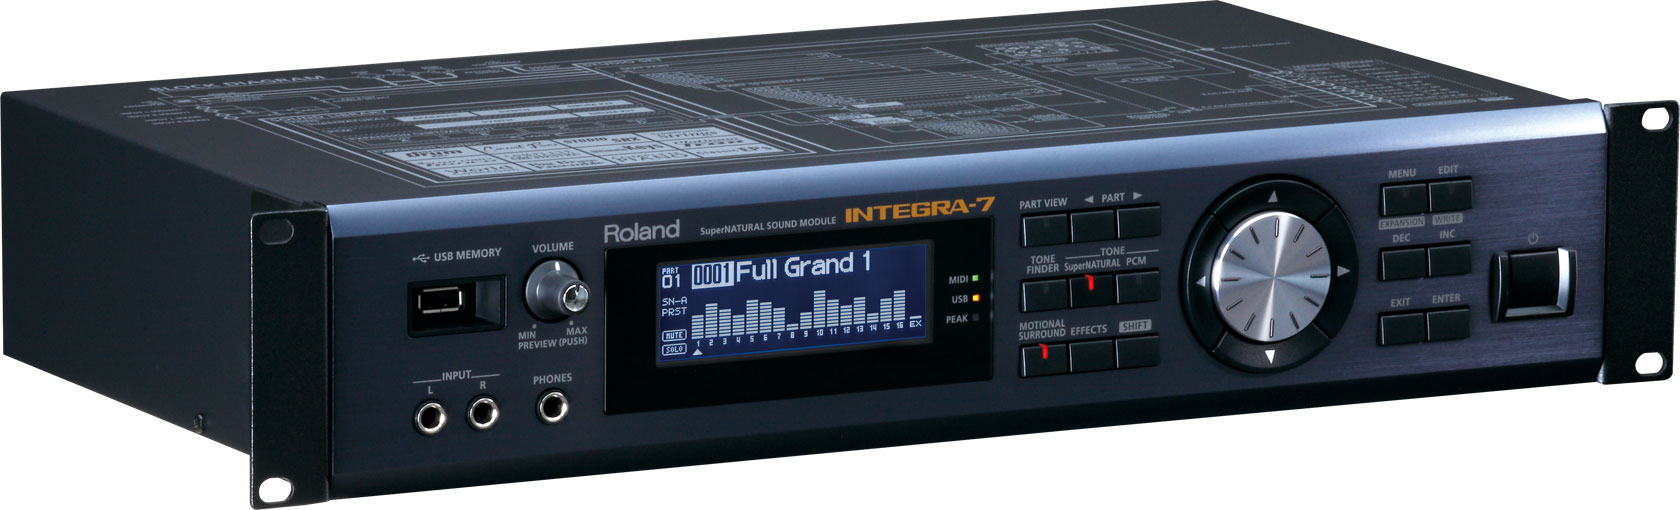 Roland INTEGRA-7 SuperNATURAL Sound Module - Elevated Audio